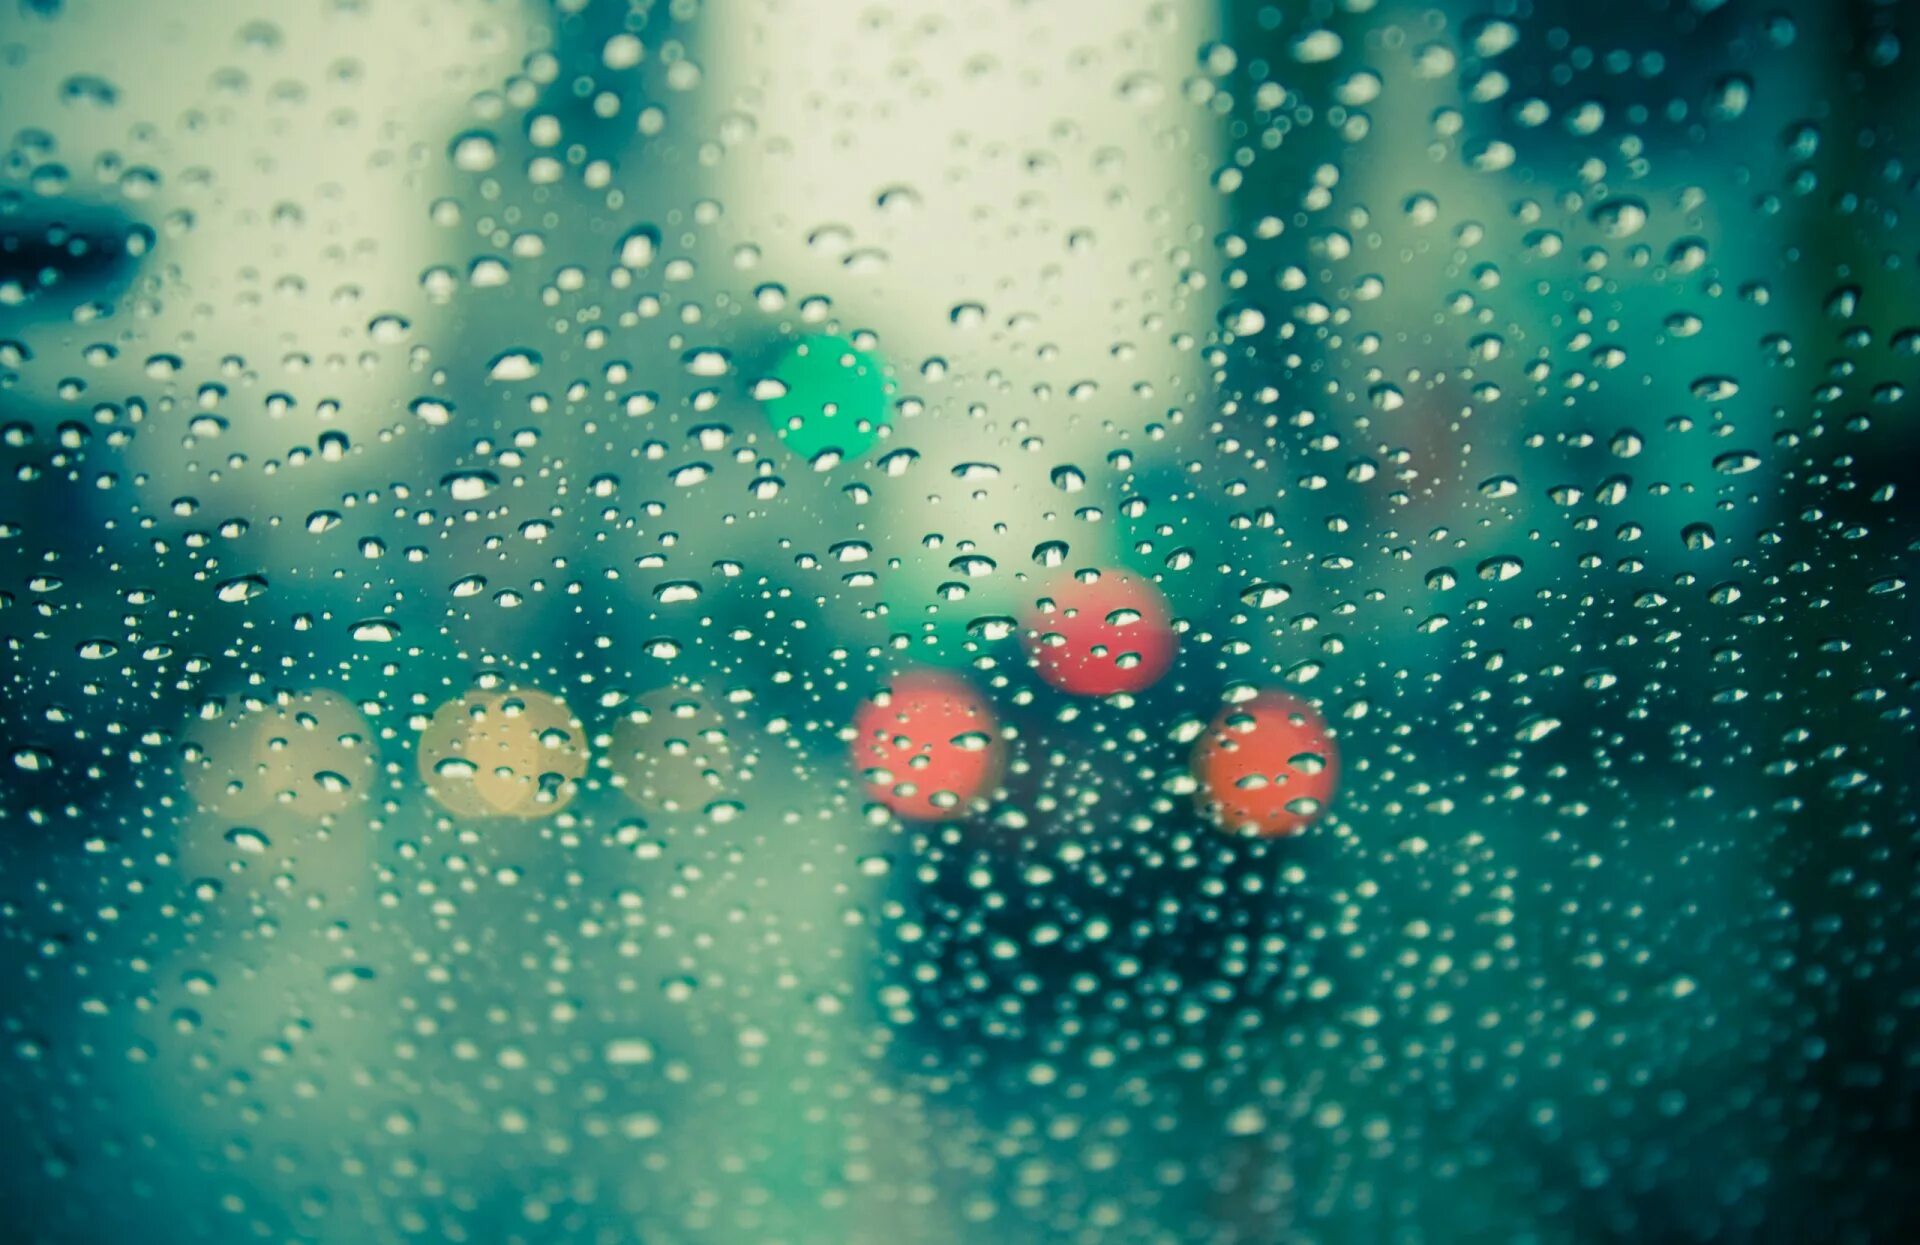 Капли на стекле. Мокрое стекло. Капли дождя. Дождь на стекле.